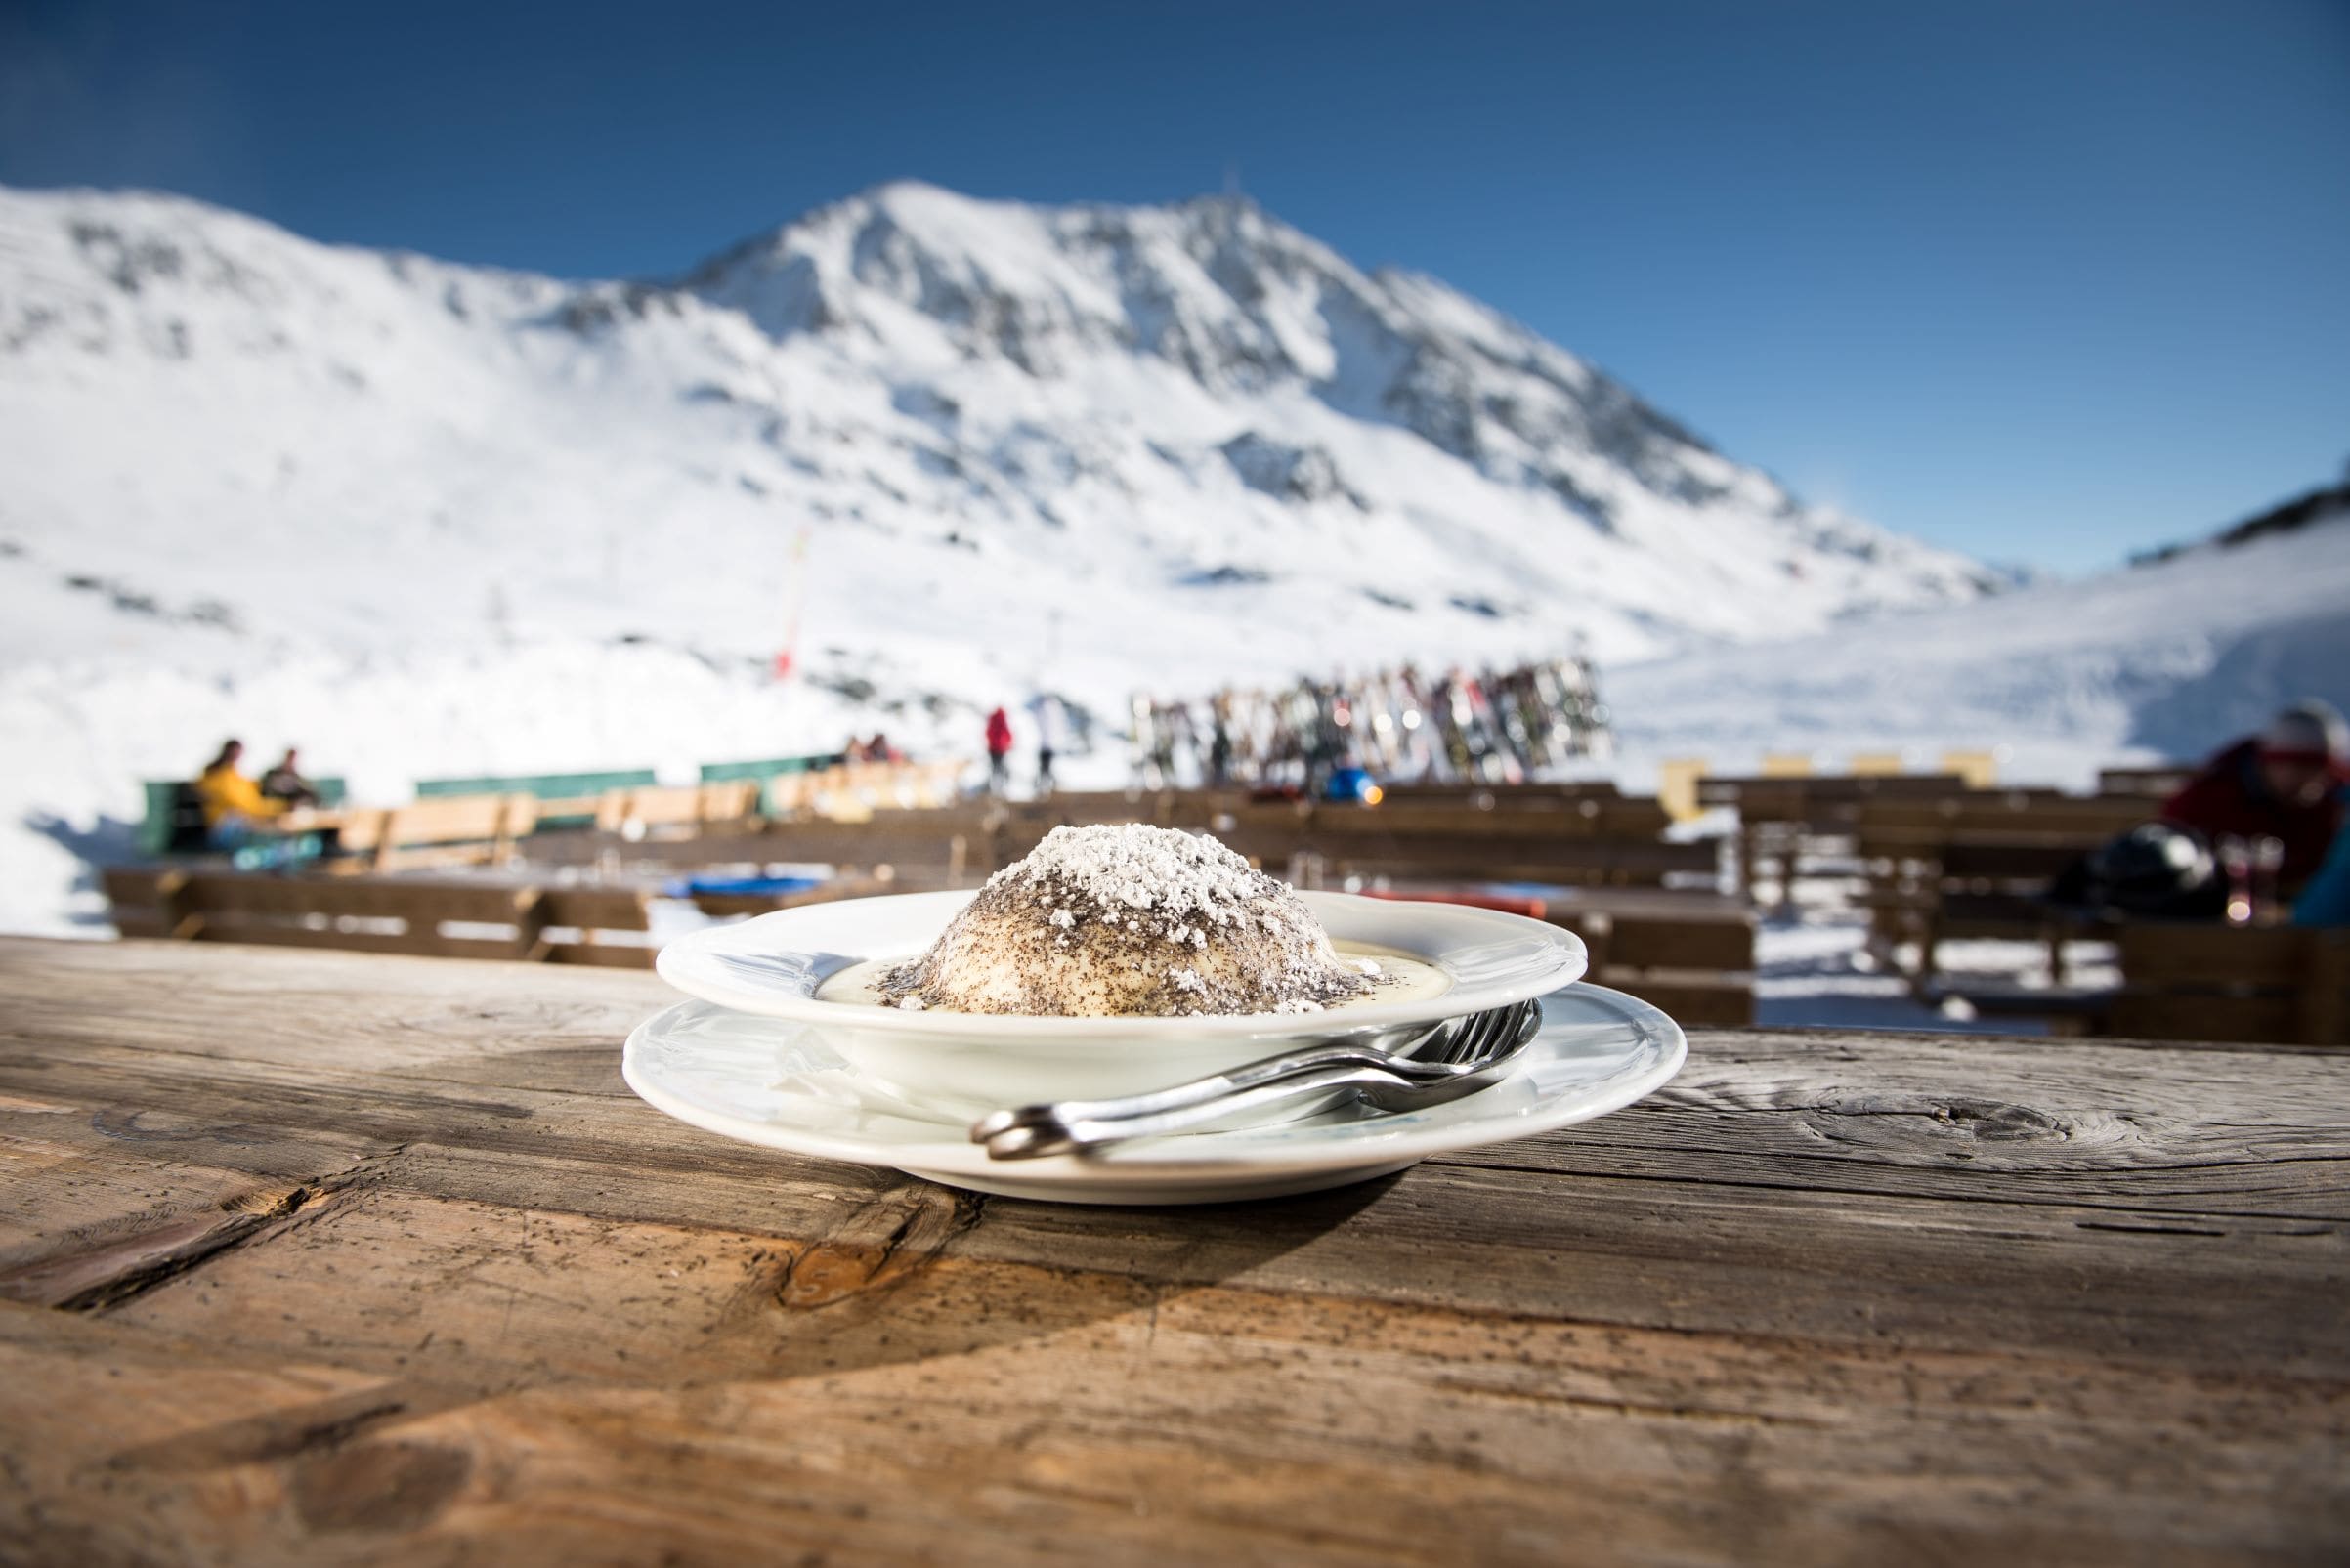 Delicacies in the après ski bar © Tourismusverband Obertauern